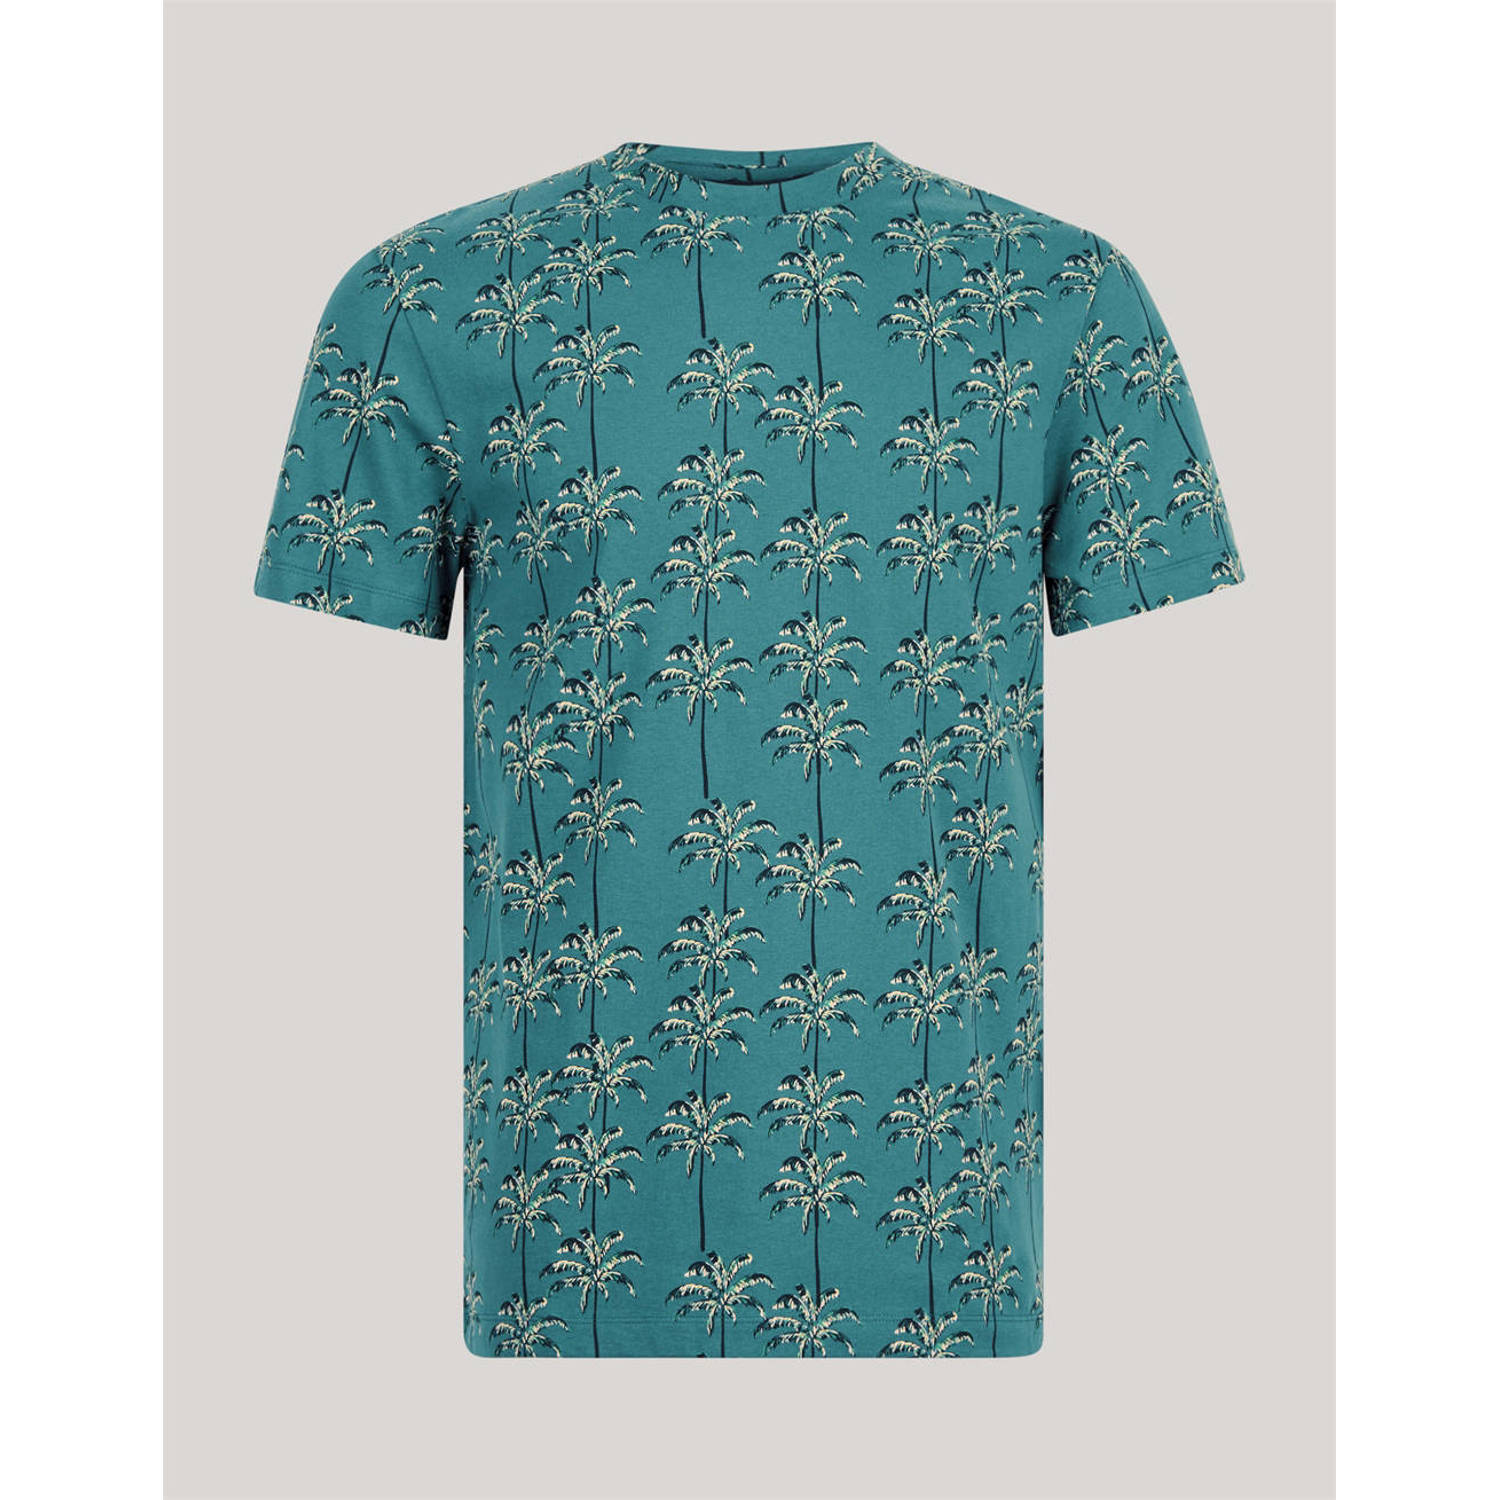 Shoeby T-shirt met all over print dark turquoise